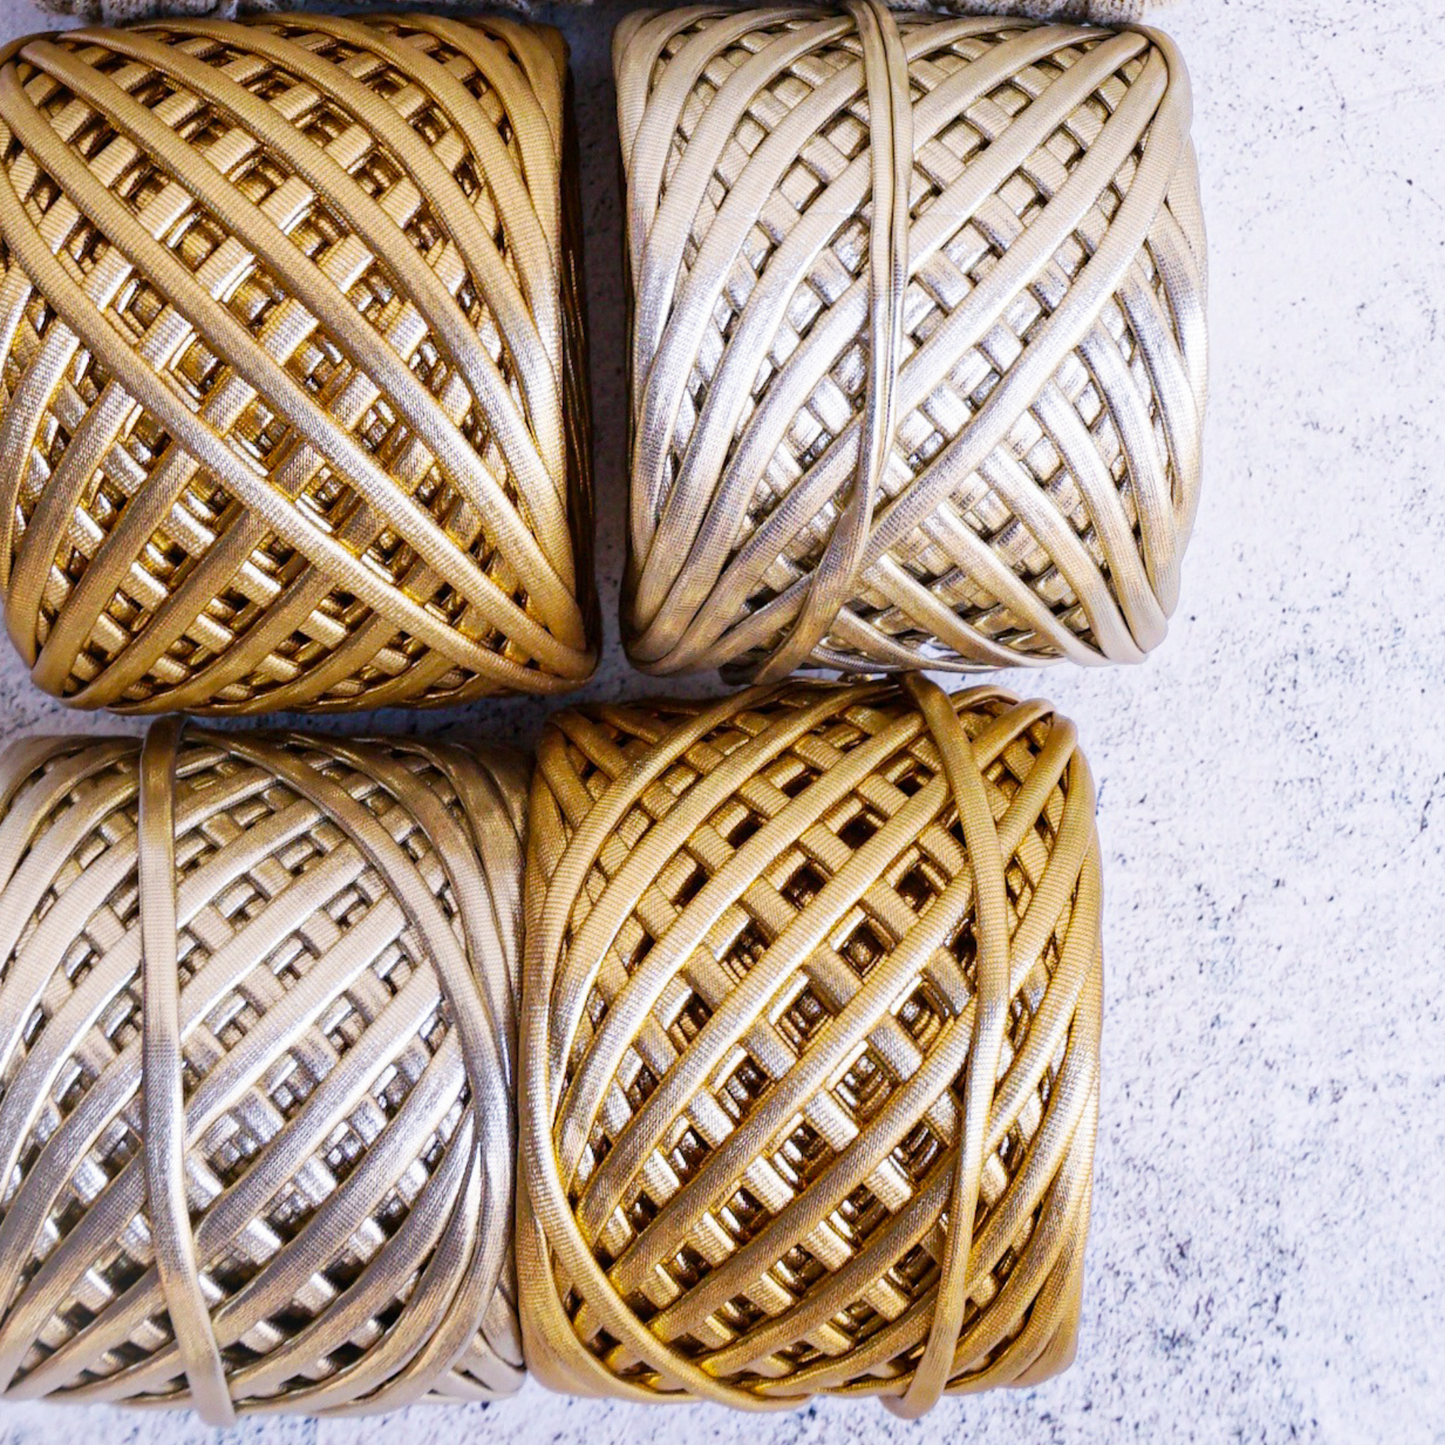 Metallic T-shirt yarn for crocheting baskets, bags, rugs and home decor.